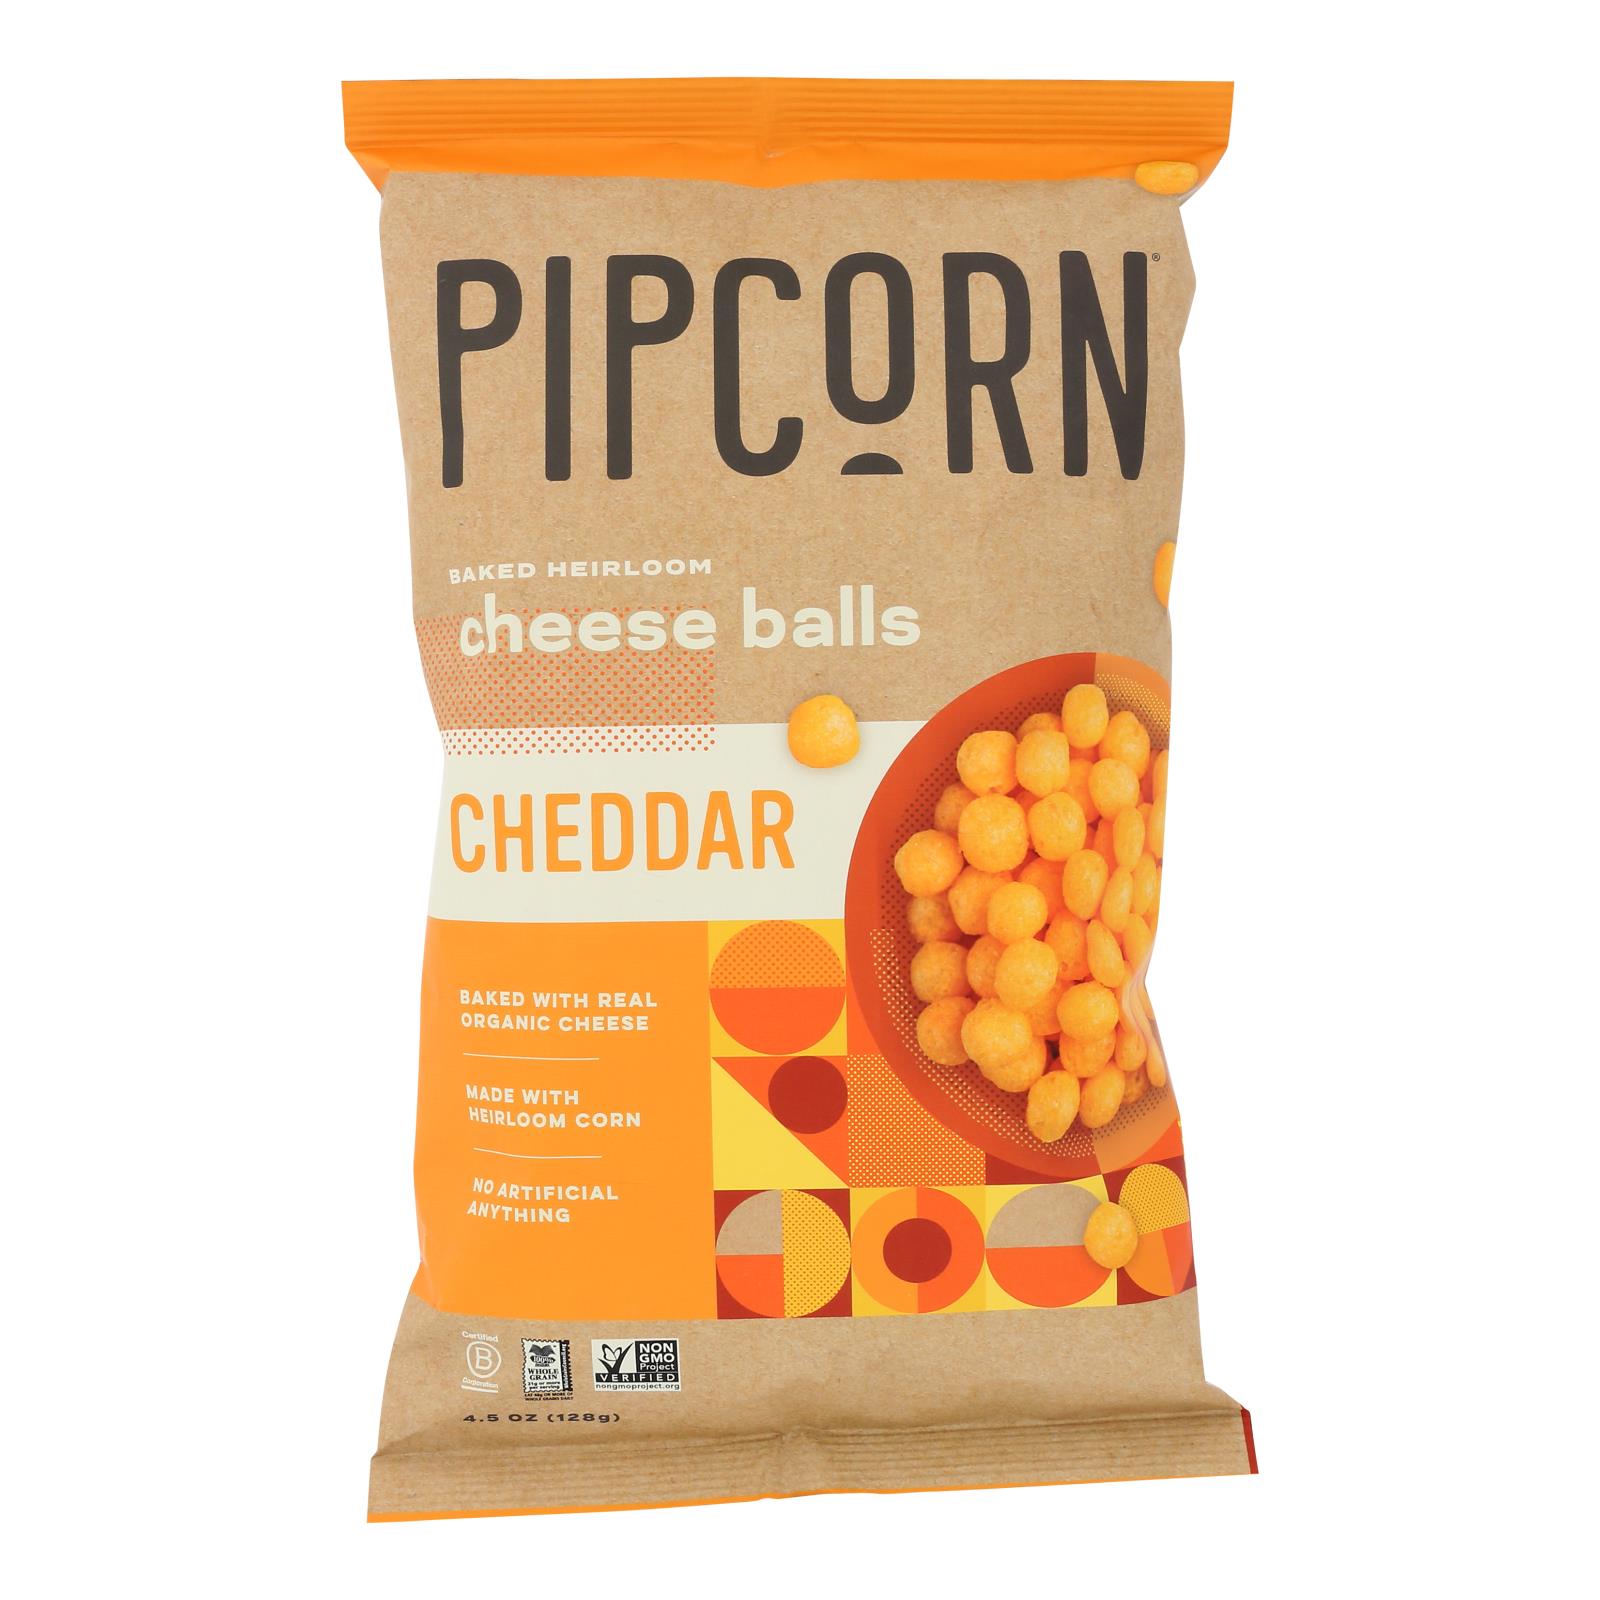 Pipcorn - Cheese Balls Cheddar - 12개 묶음상품 - 4.5 OZ